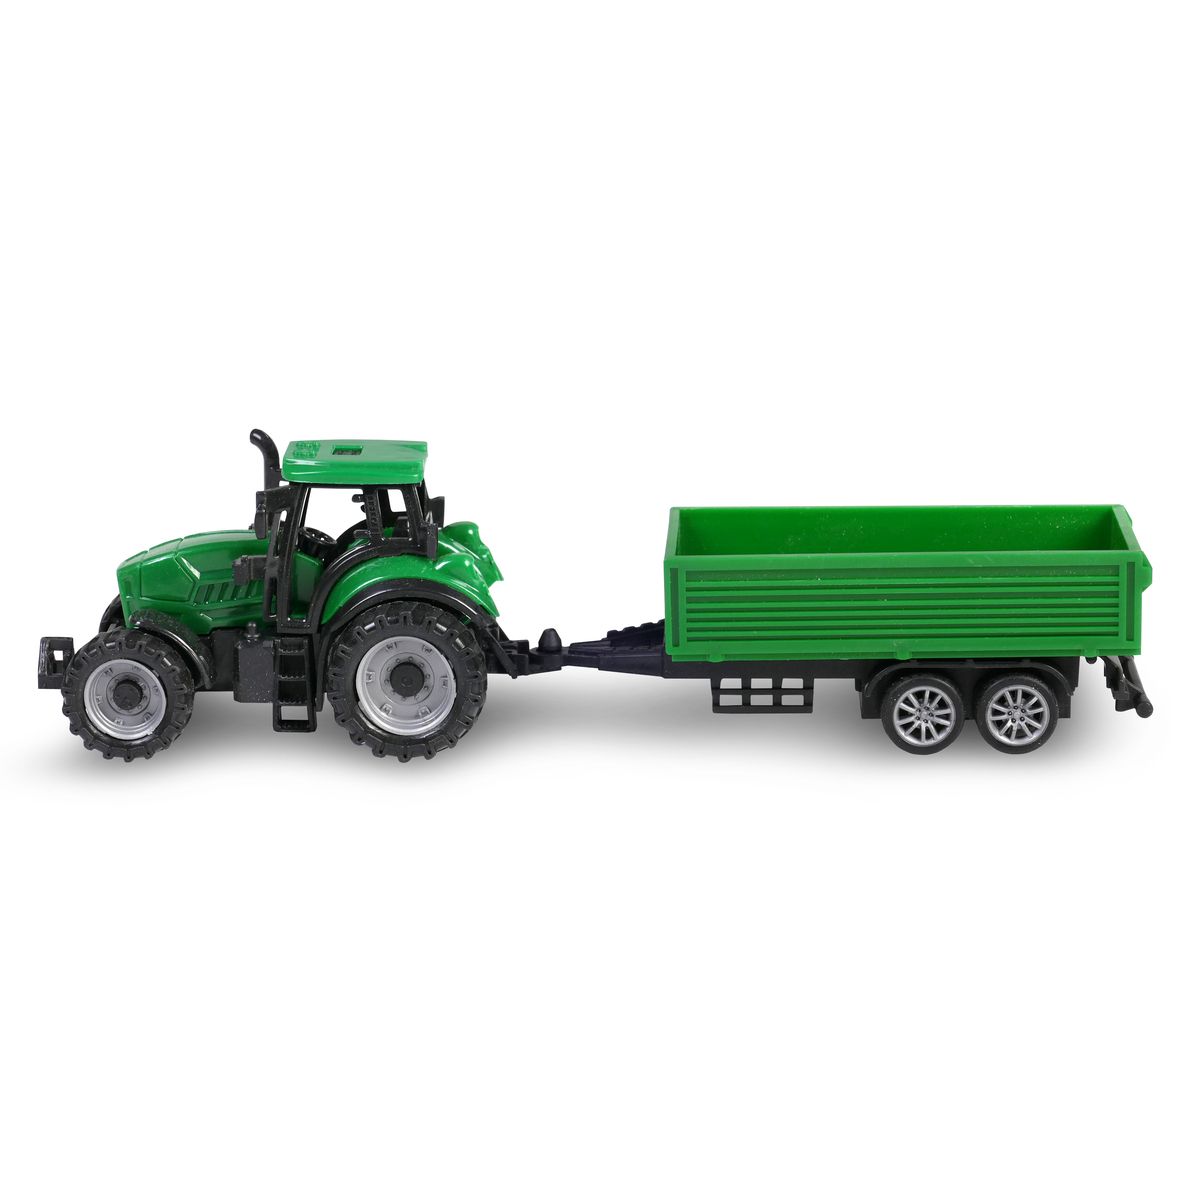 Traktor zestaw farma Artyk (143755)